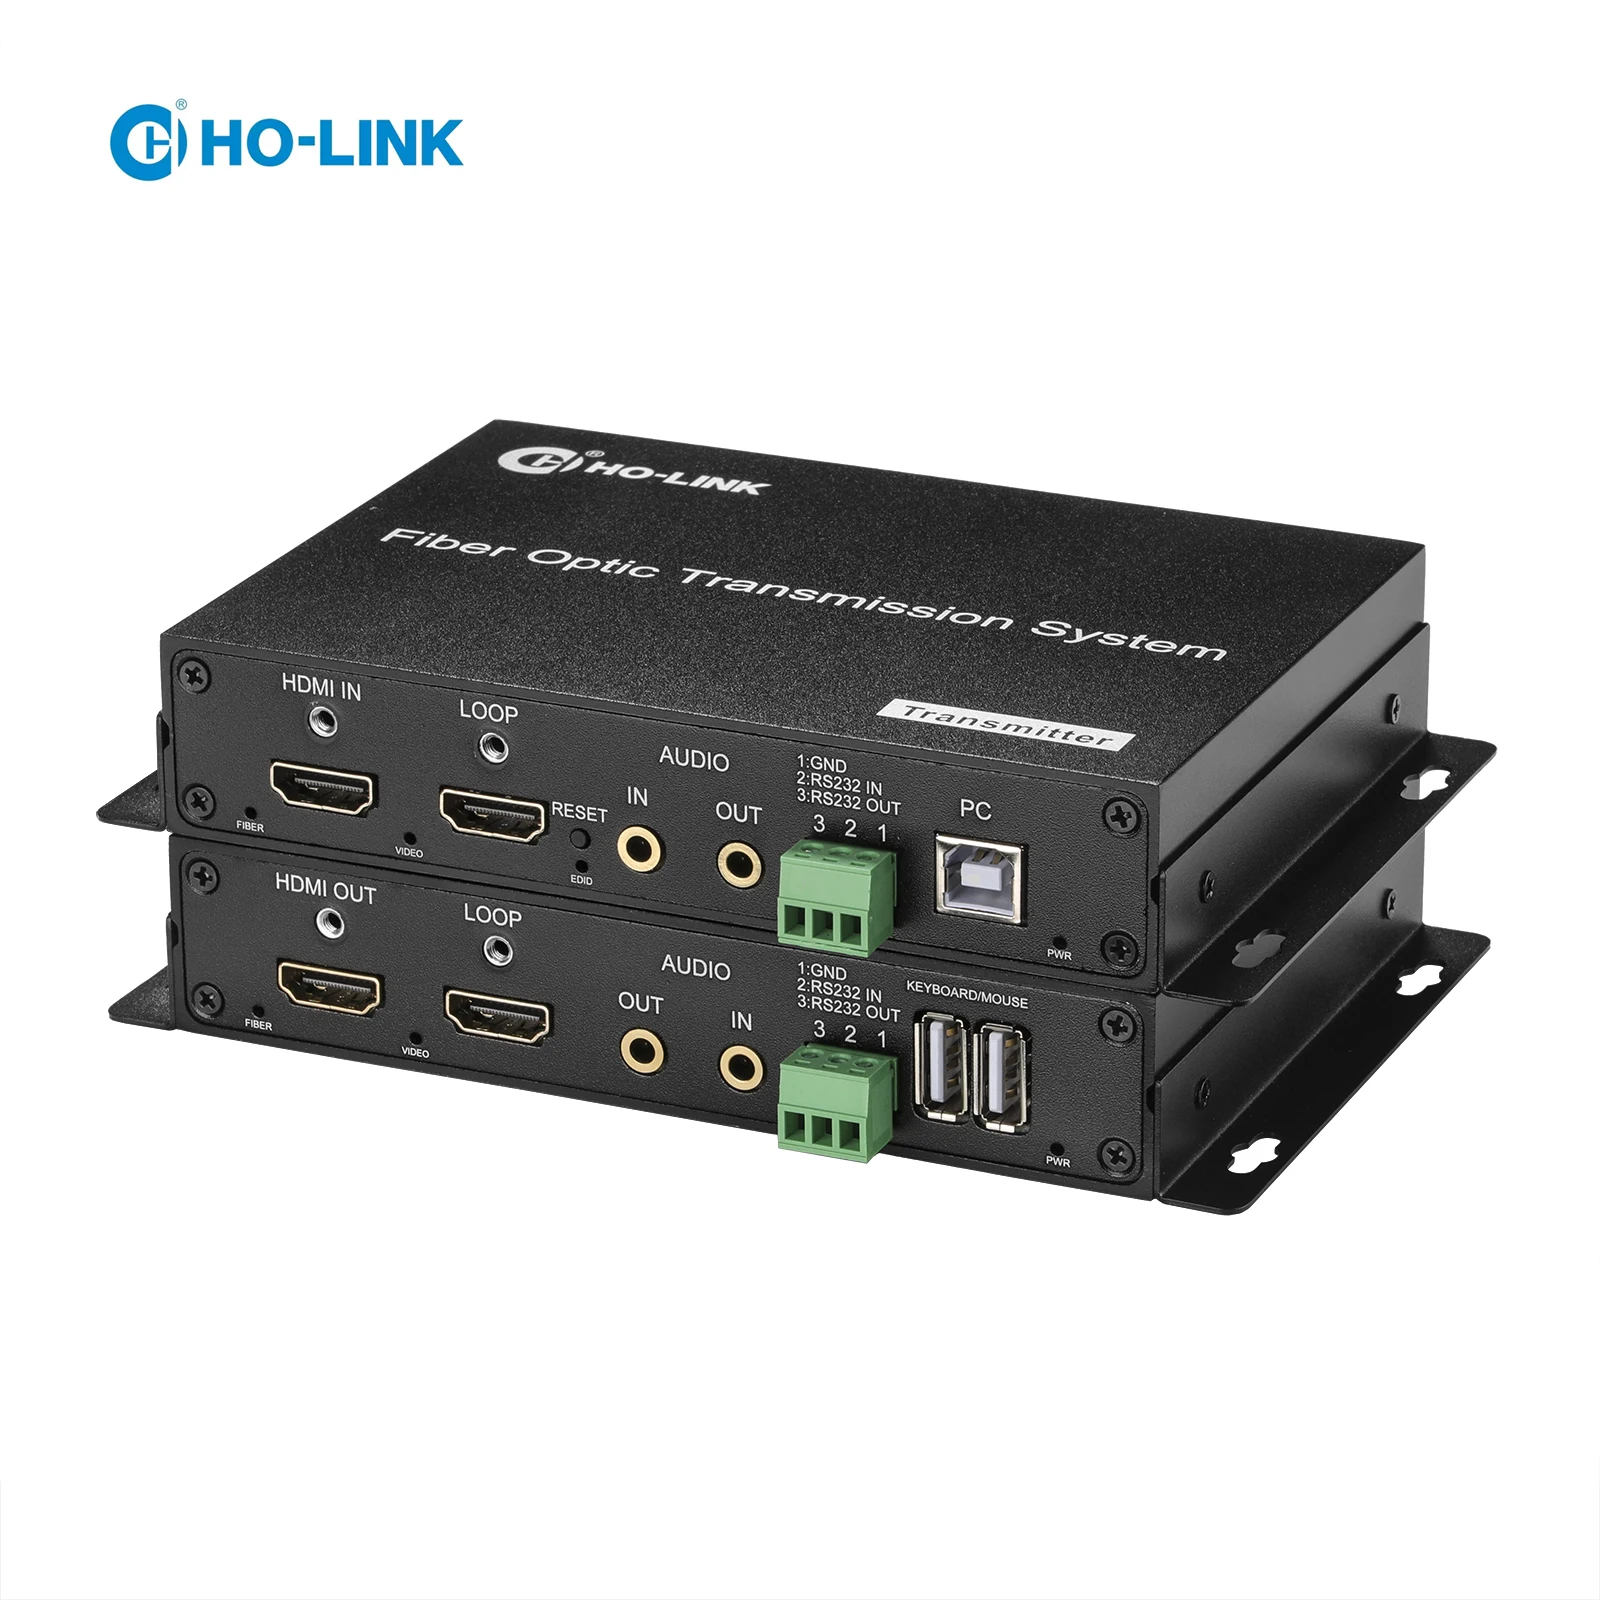 

4K HDMI@60HZ to fiber optic video media converter with KVM